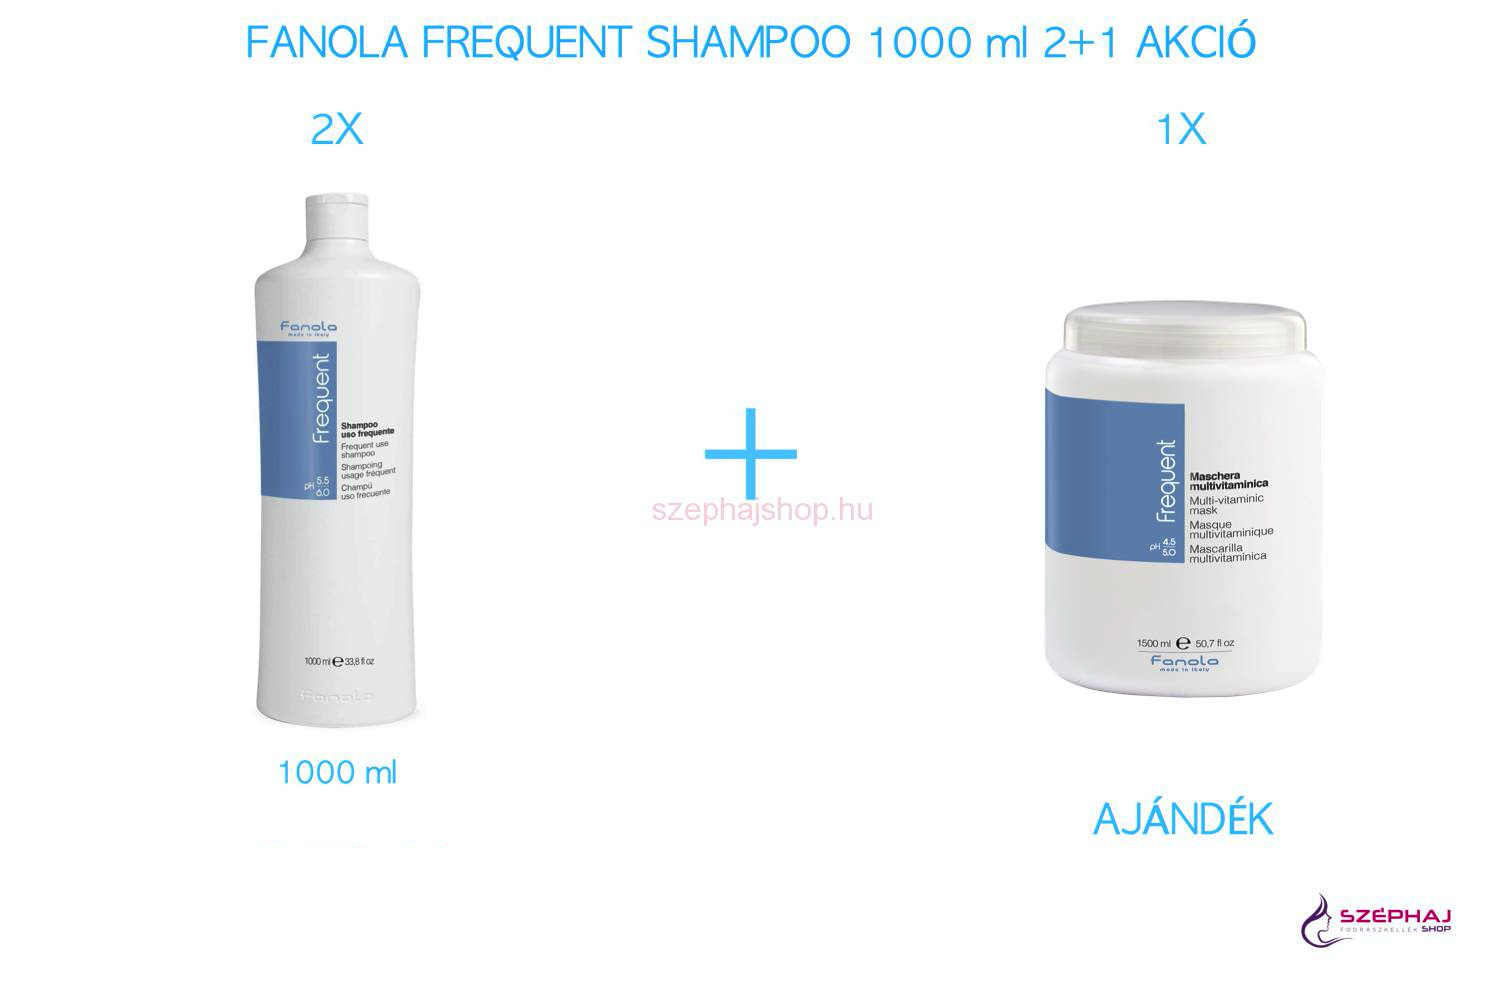 FANOLA Frequent Shampoo 1000 ml 2+1 AKCIÓ